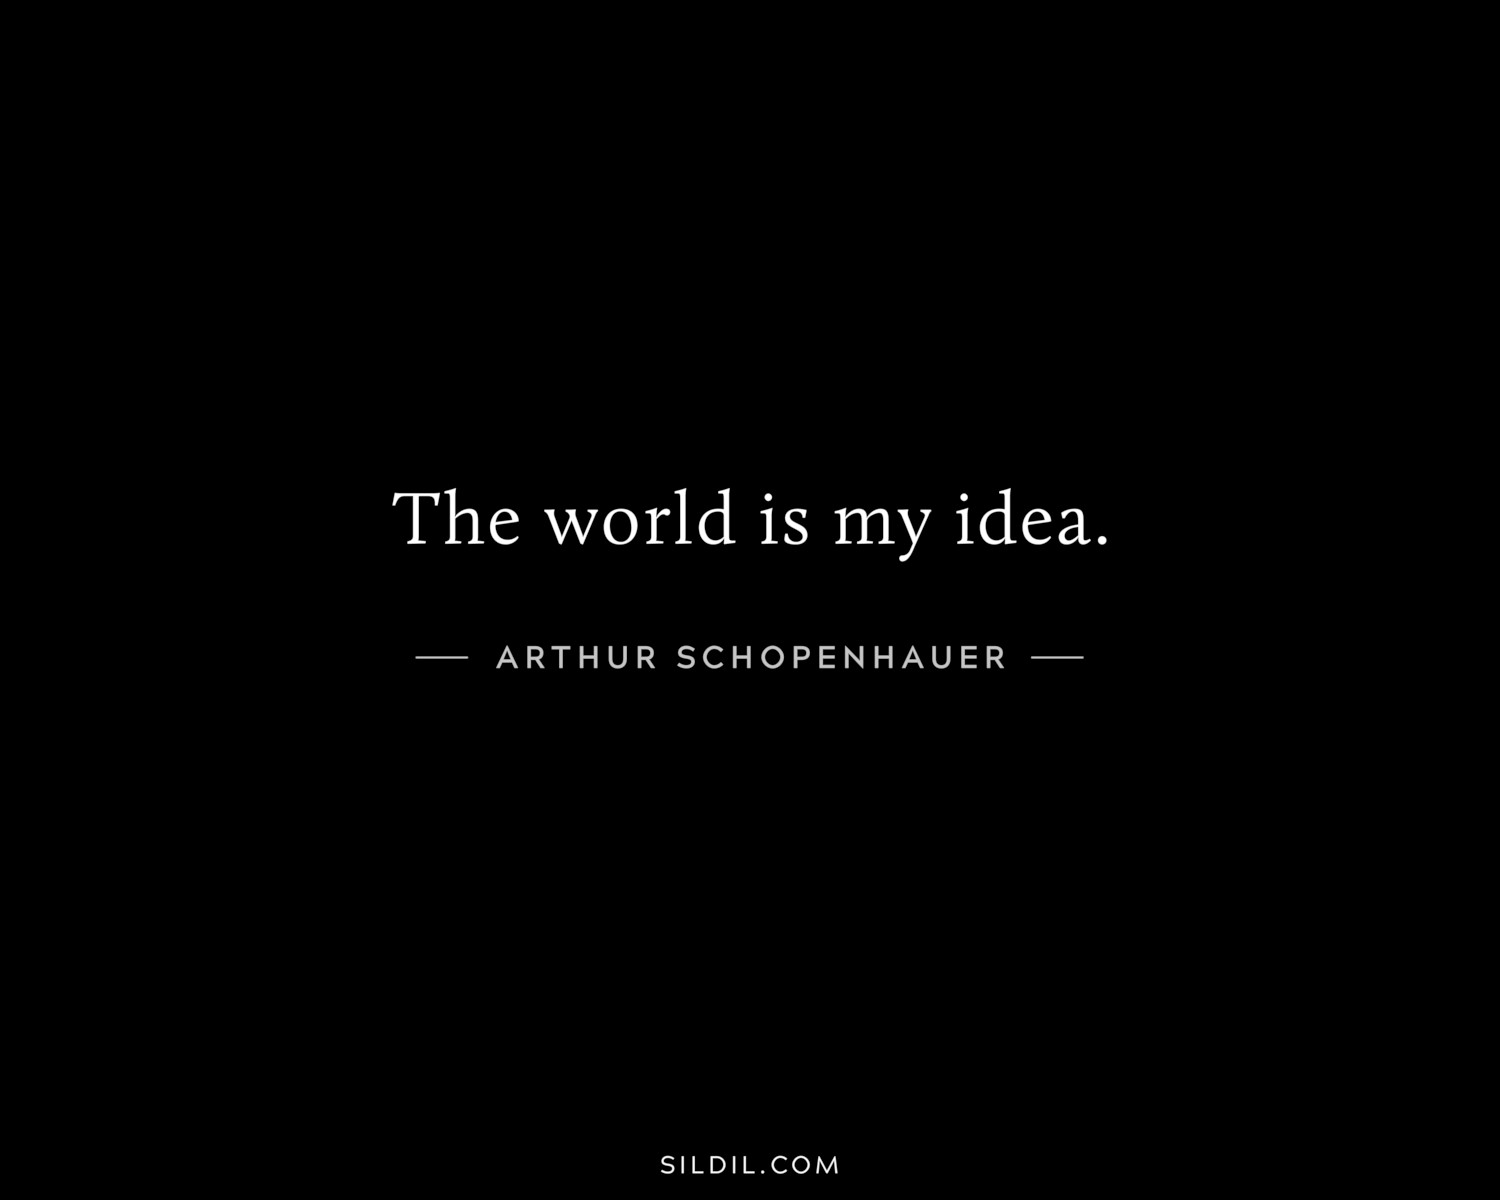 The world is my idea.